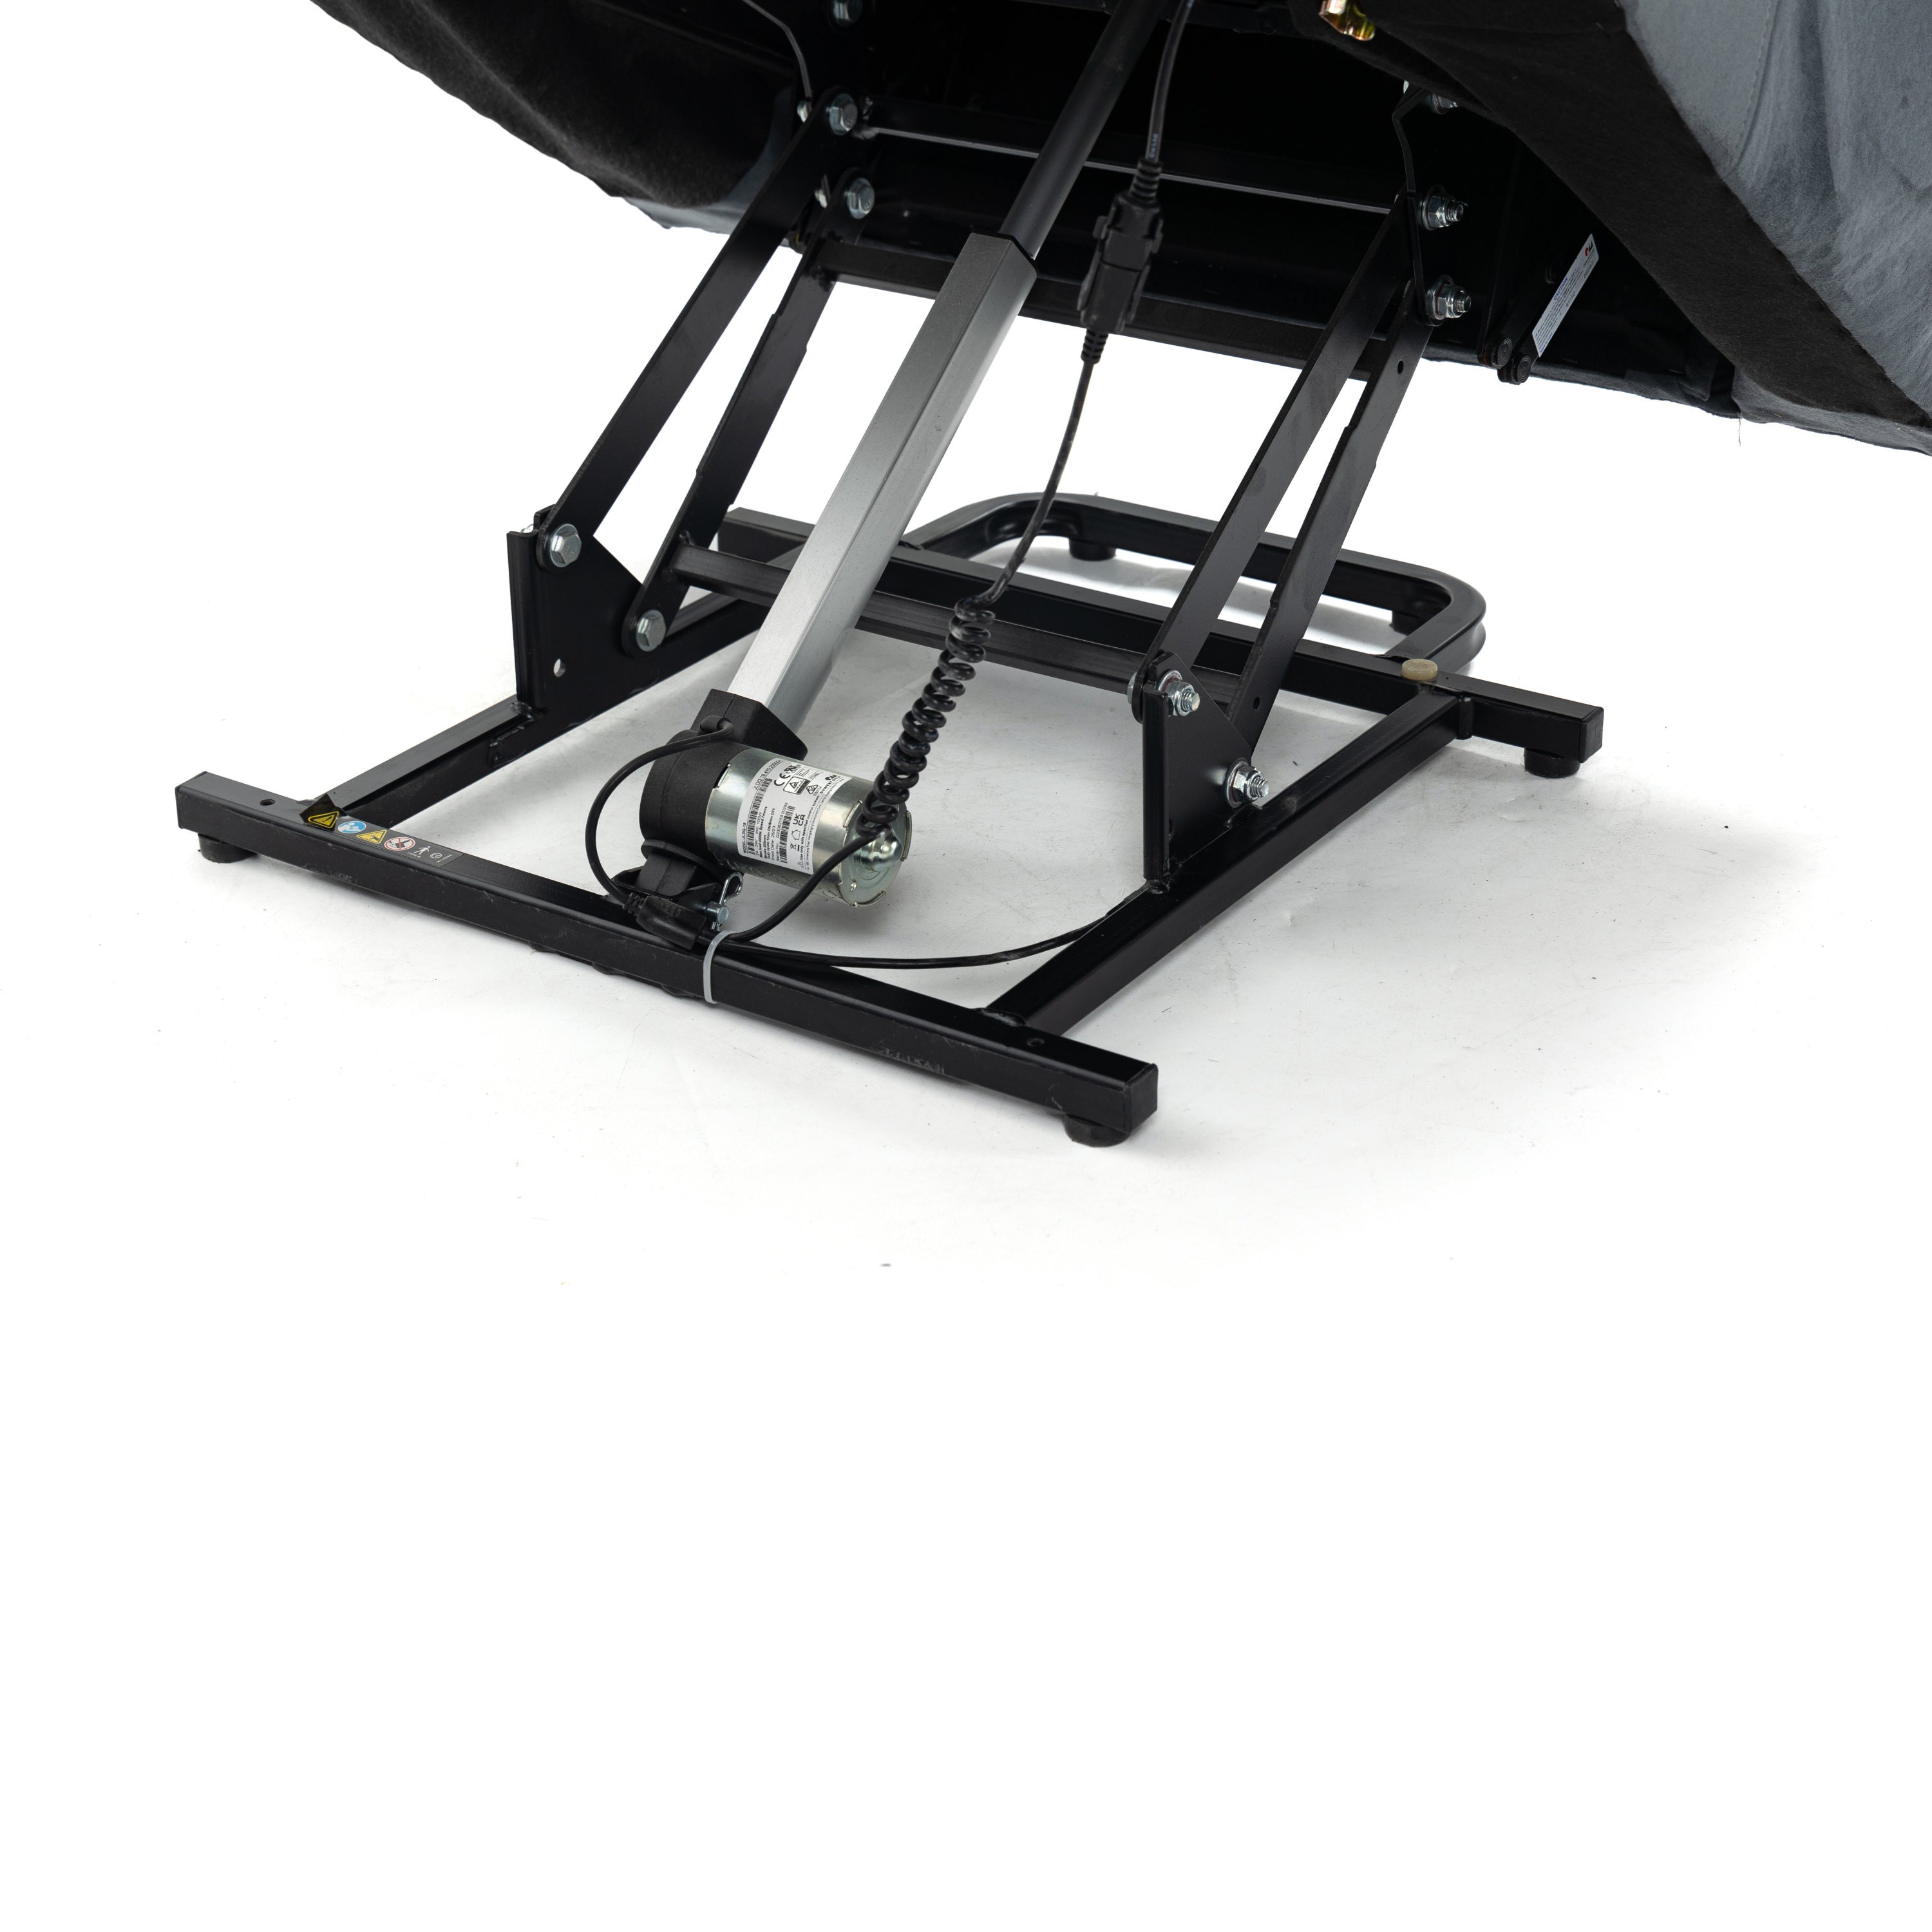 Blue Power Lift Recliner Chair with Vibration Massage and Lumbar Heat, lifting mechanism